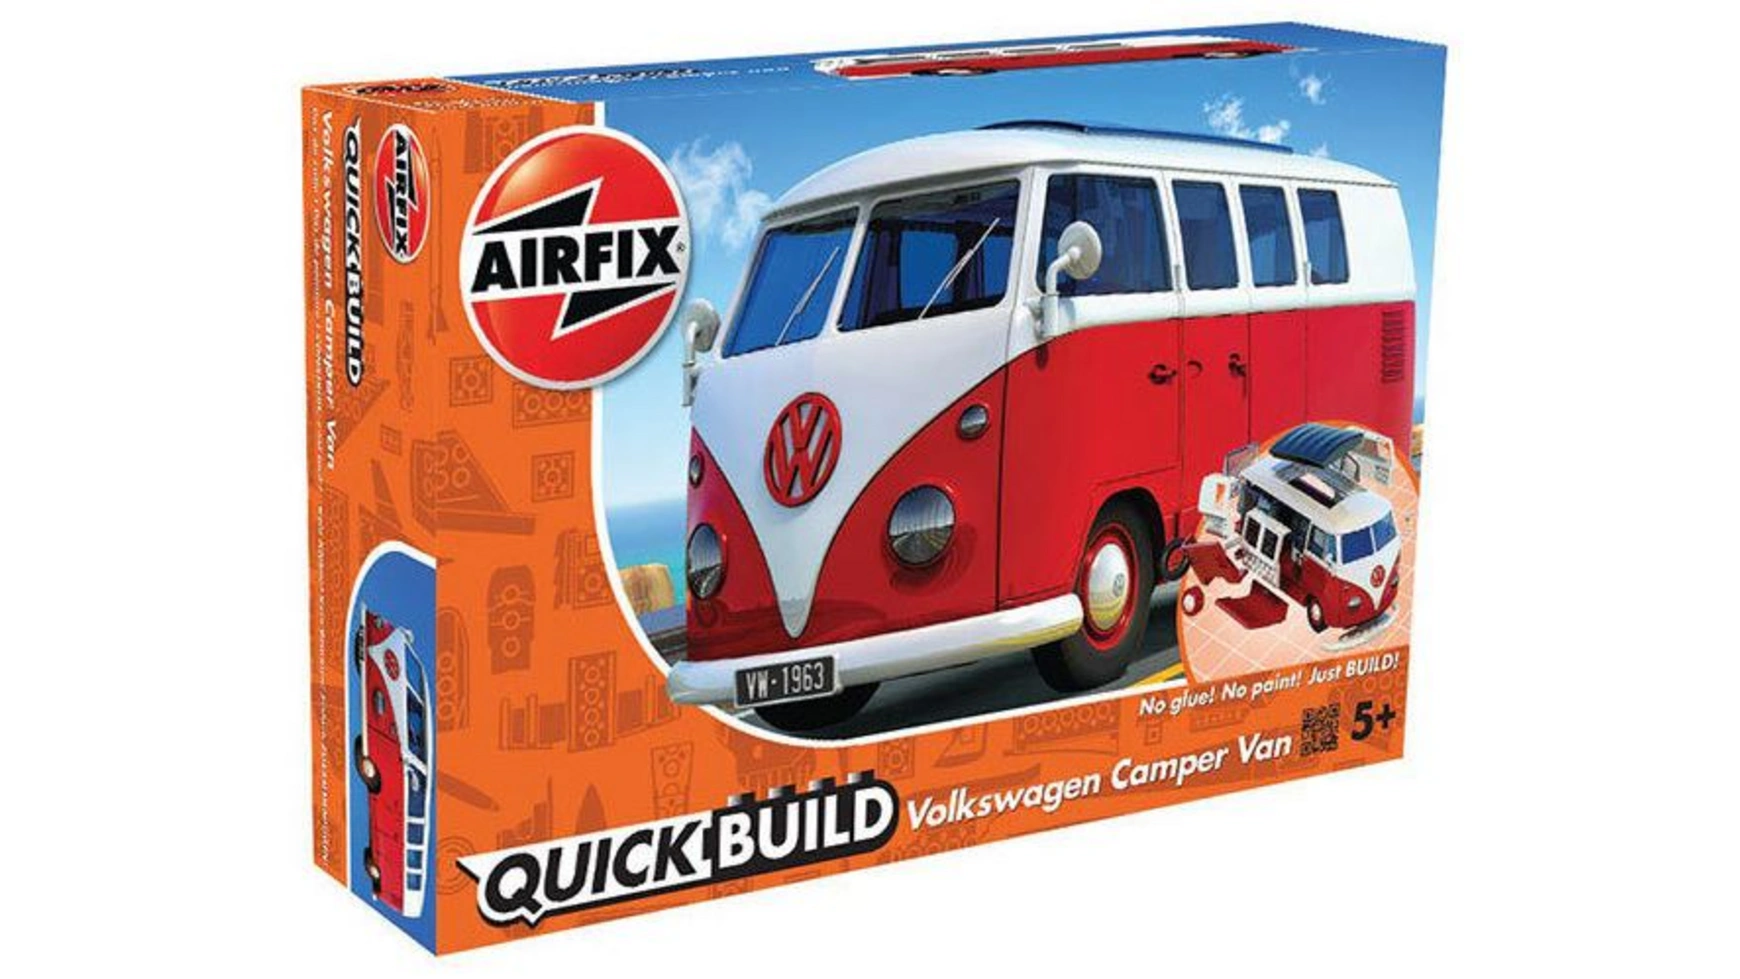 Airfix Кемпер VW Quickbuild